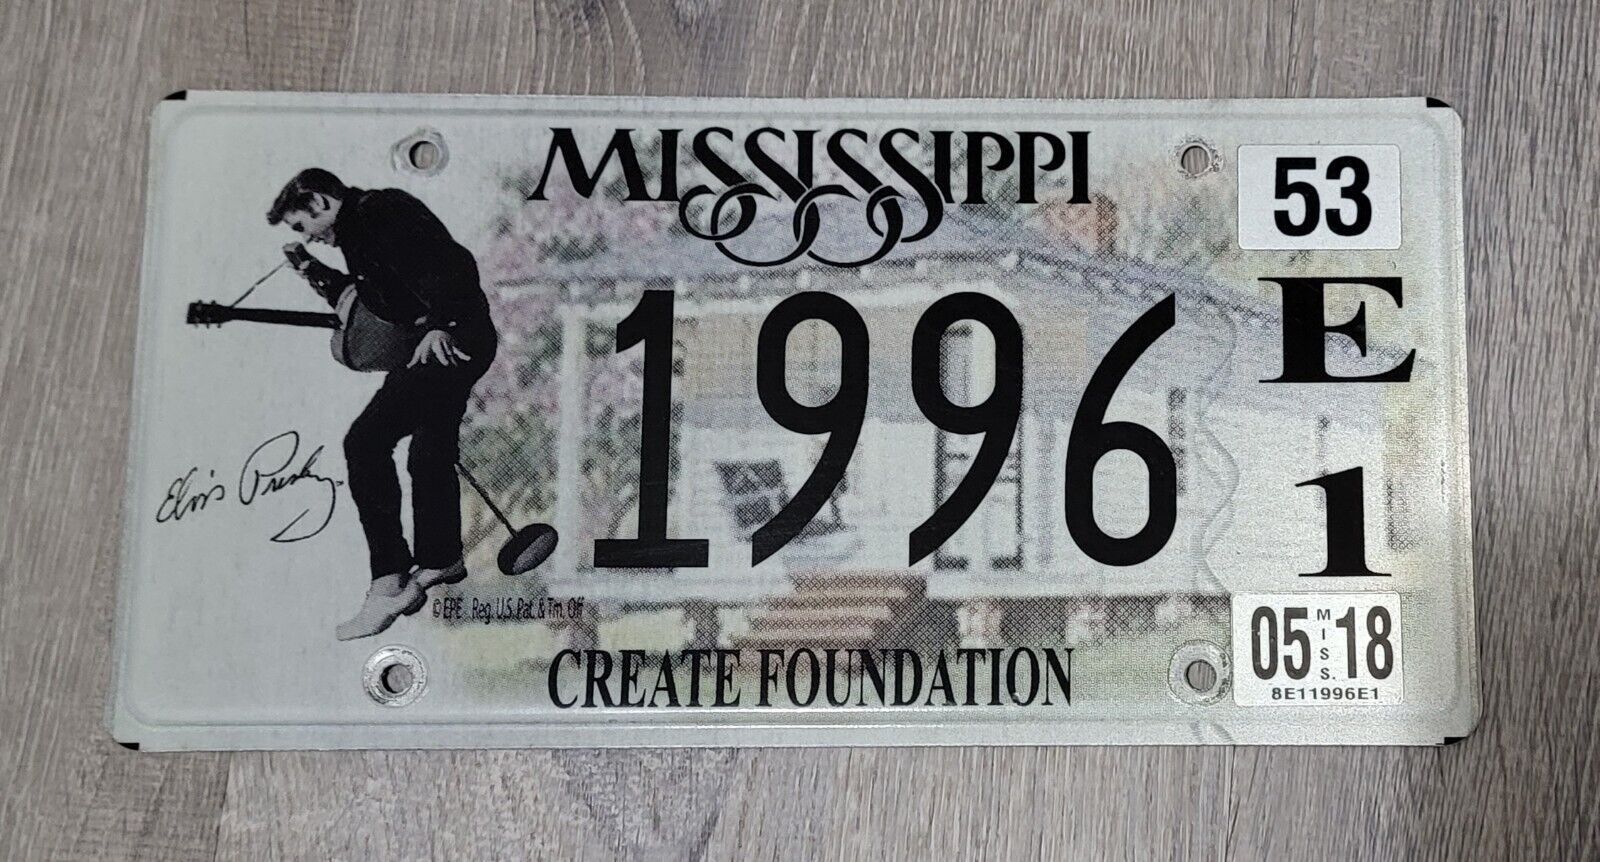 Expired Mississippi License Plate Create Foundation Elvis Presley